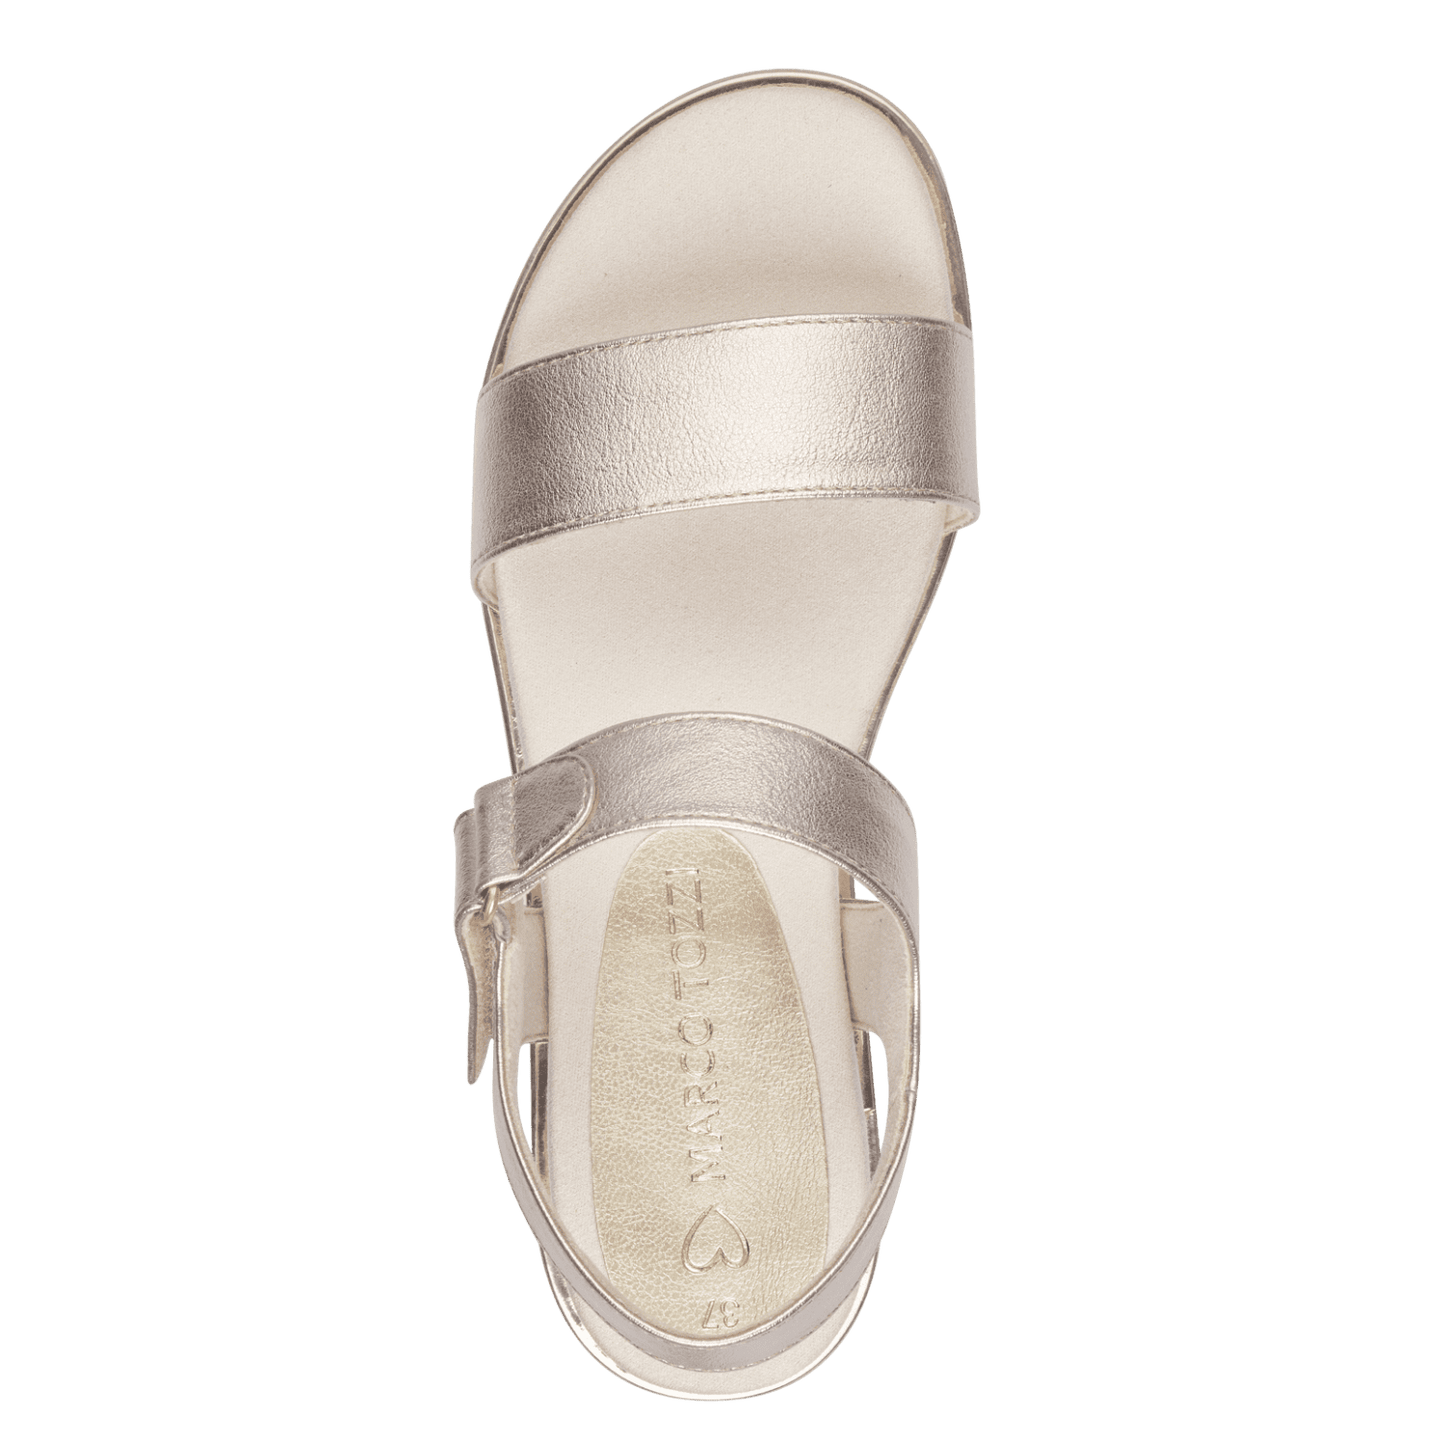 Marco Tozzi - Open Foot Sandals - 28420